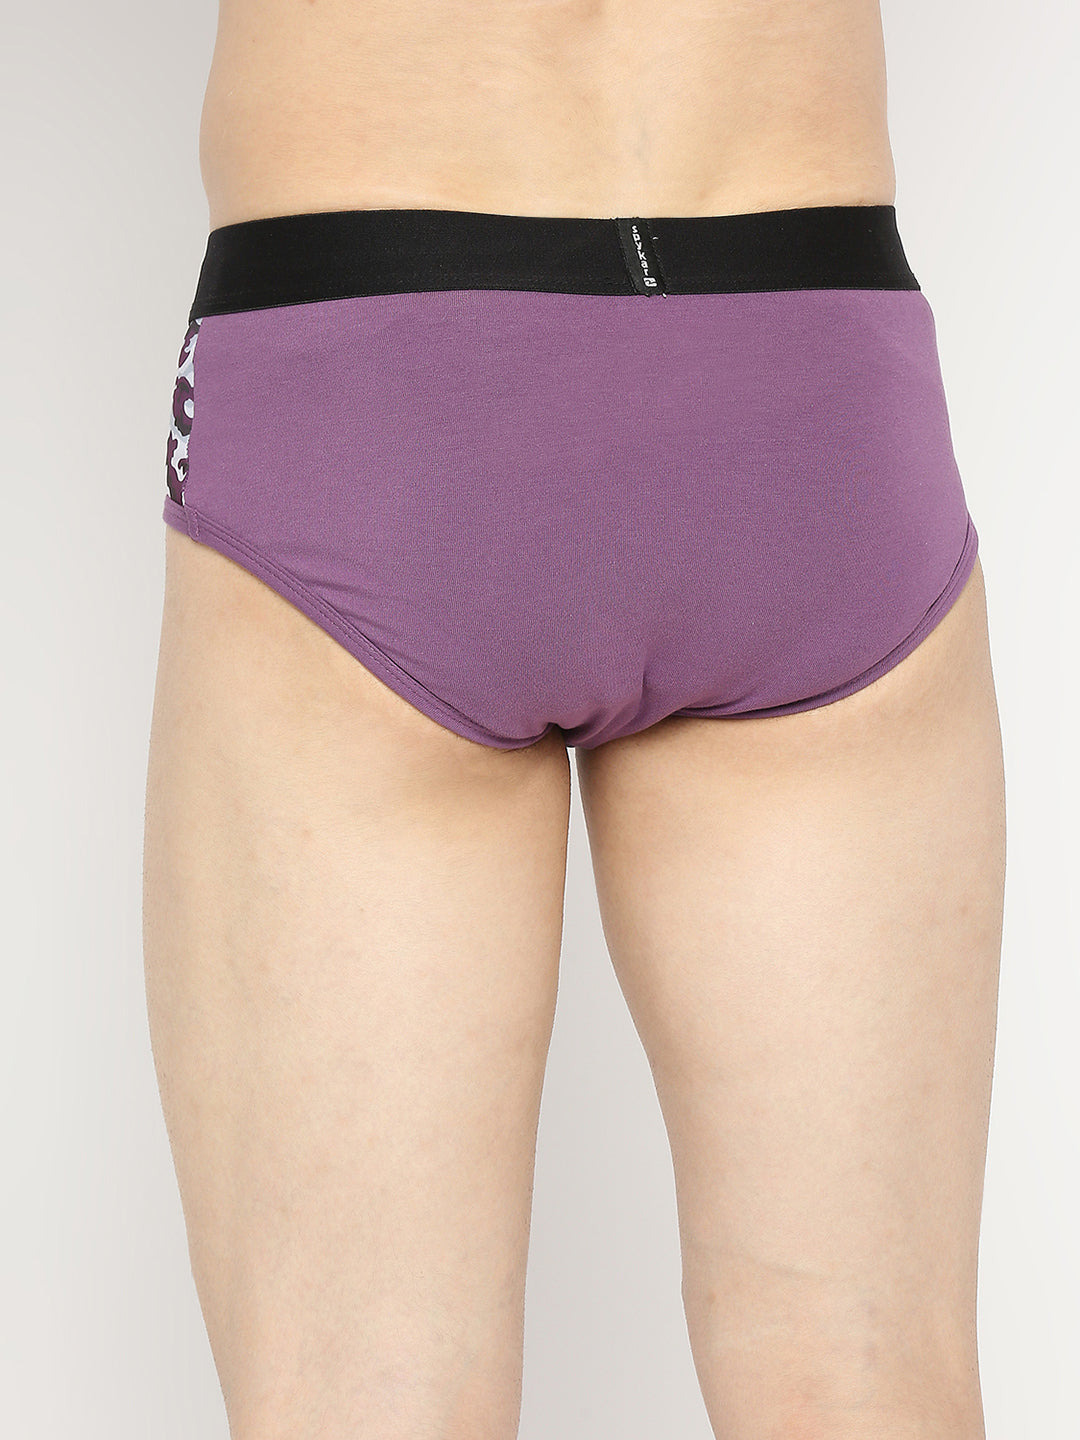 Underjeans by Spykar Men Premium Dull Purple Cotton Blend Brief -  ujnpbs021dullpurple